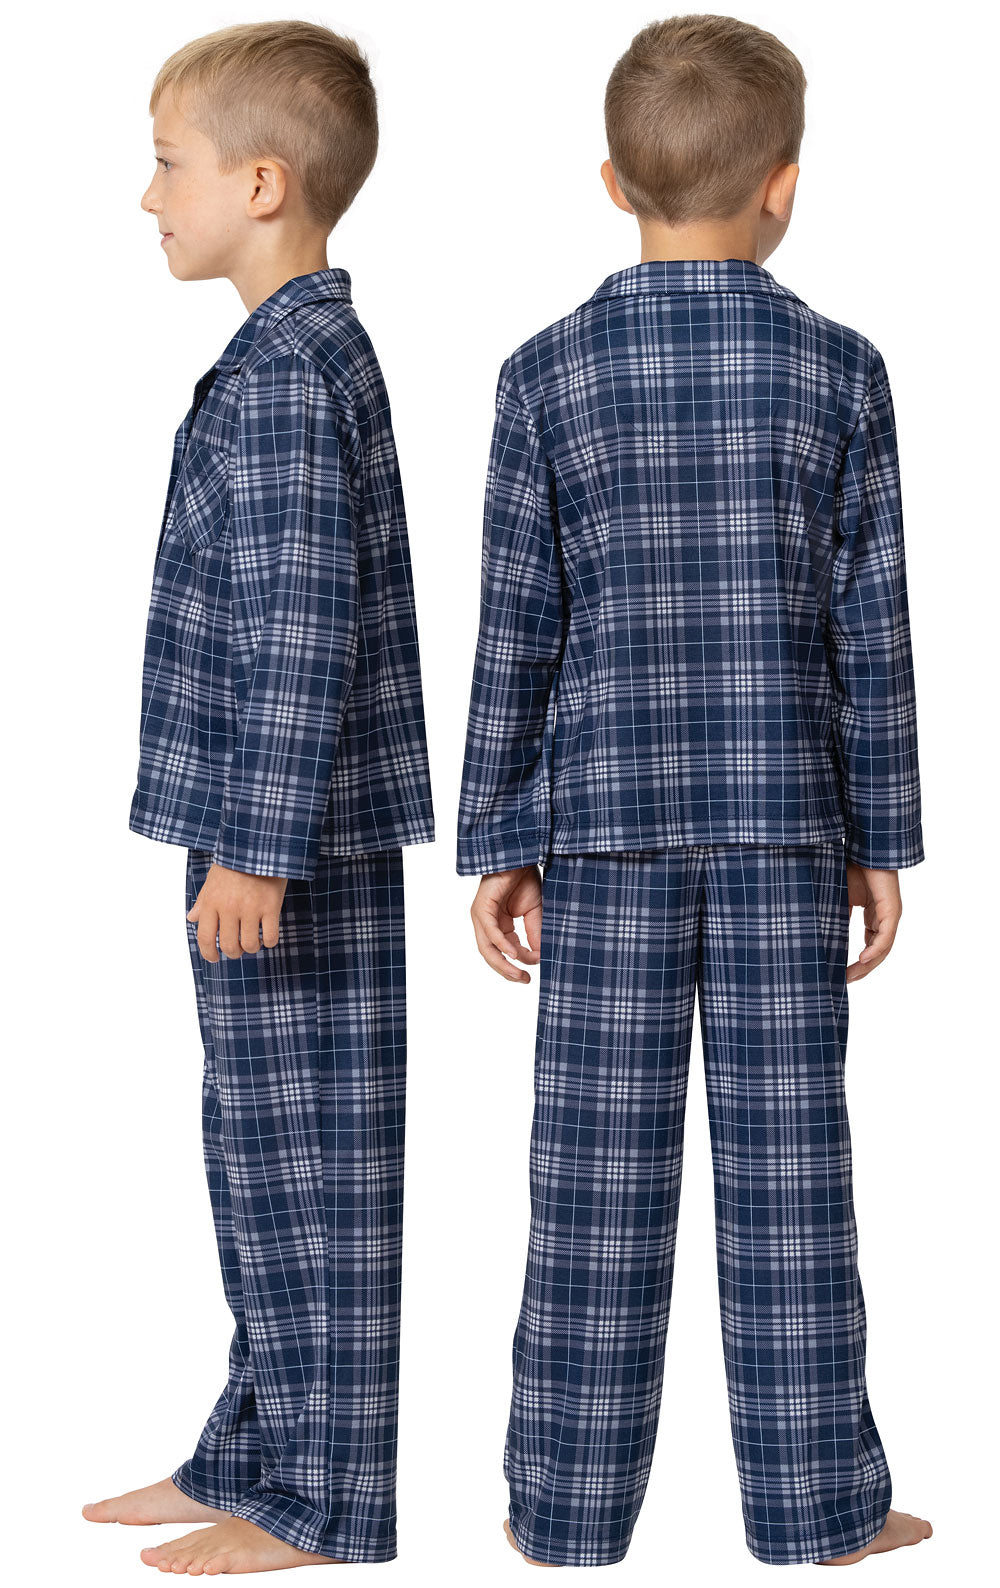 Button-Front Unisex Kids Pajamas